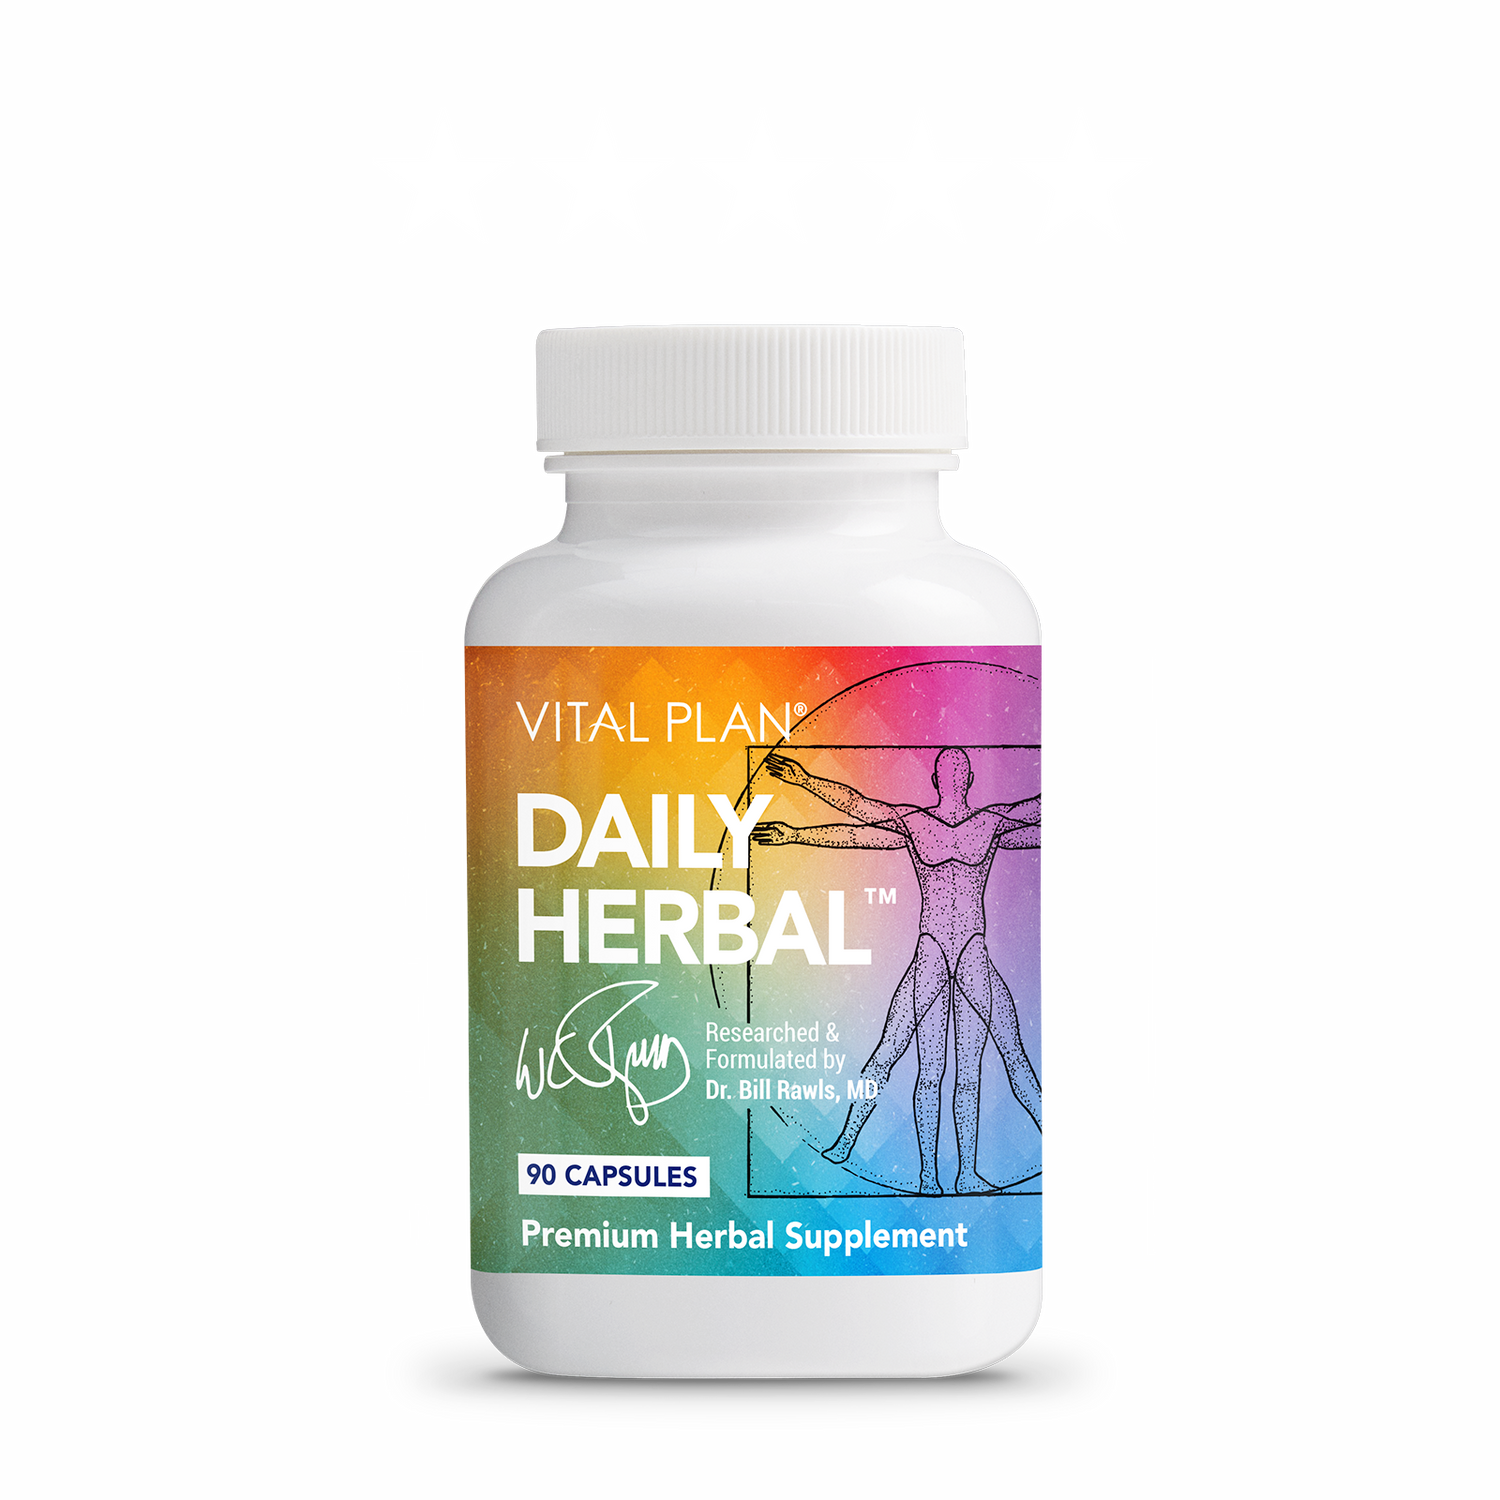 Daily-Herbal-5-stars - Vital Plan